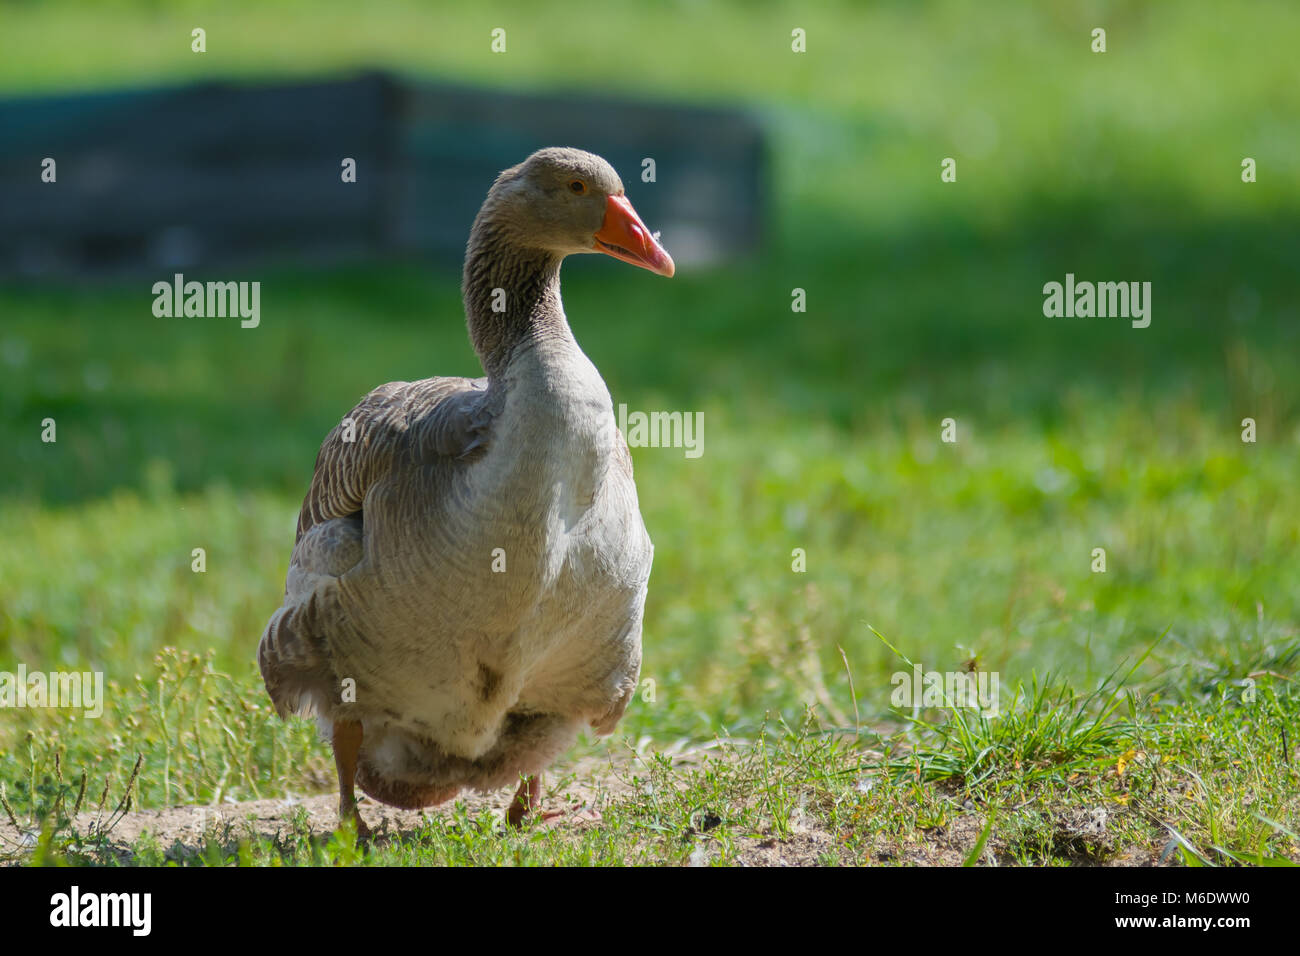 Grey goose on grass Stock Photo - Alamy